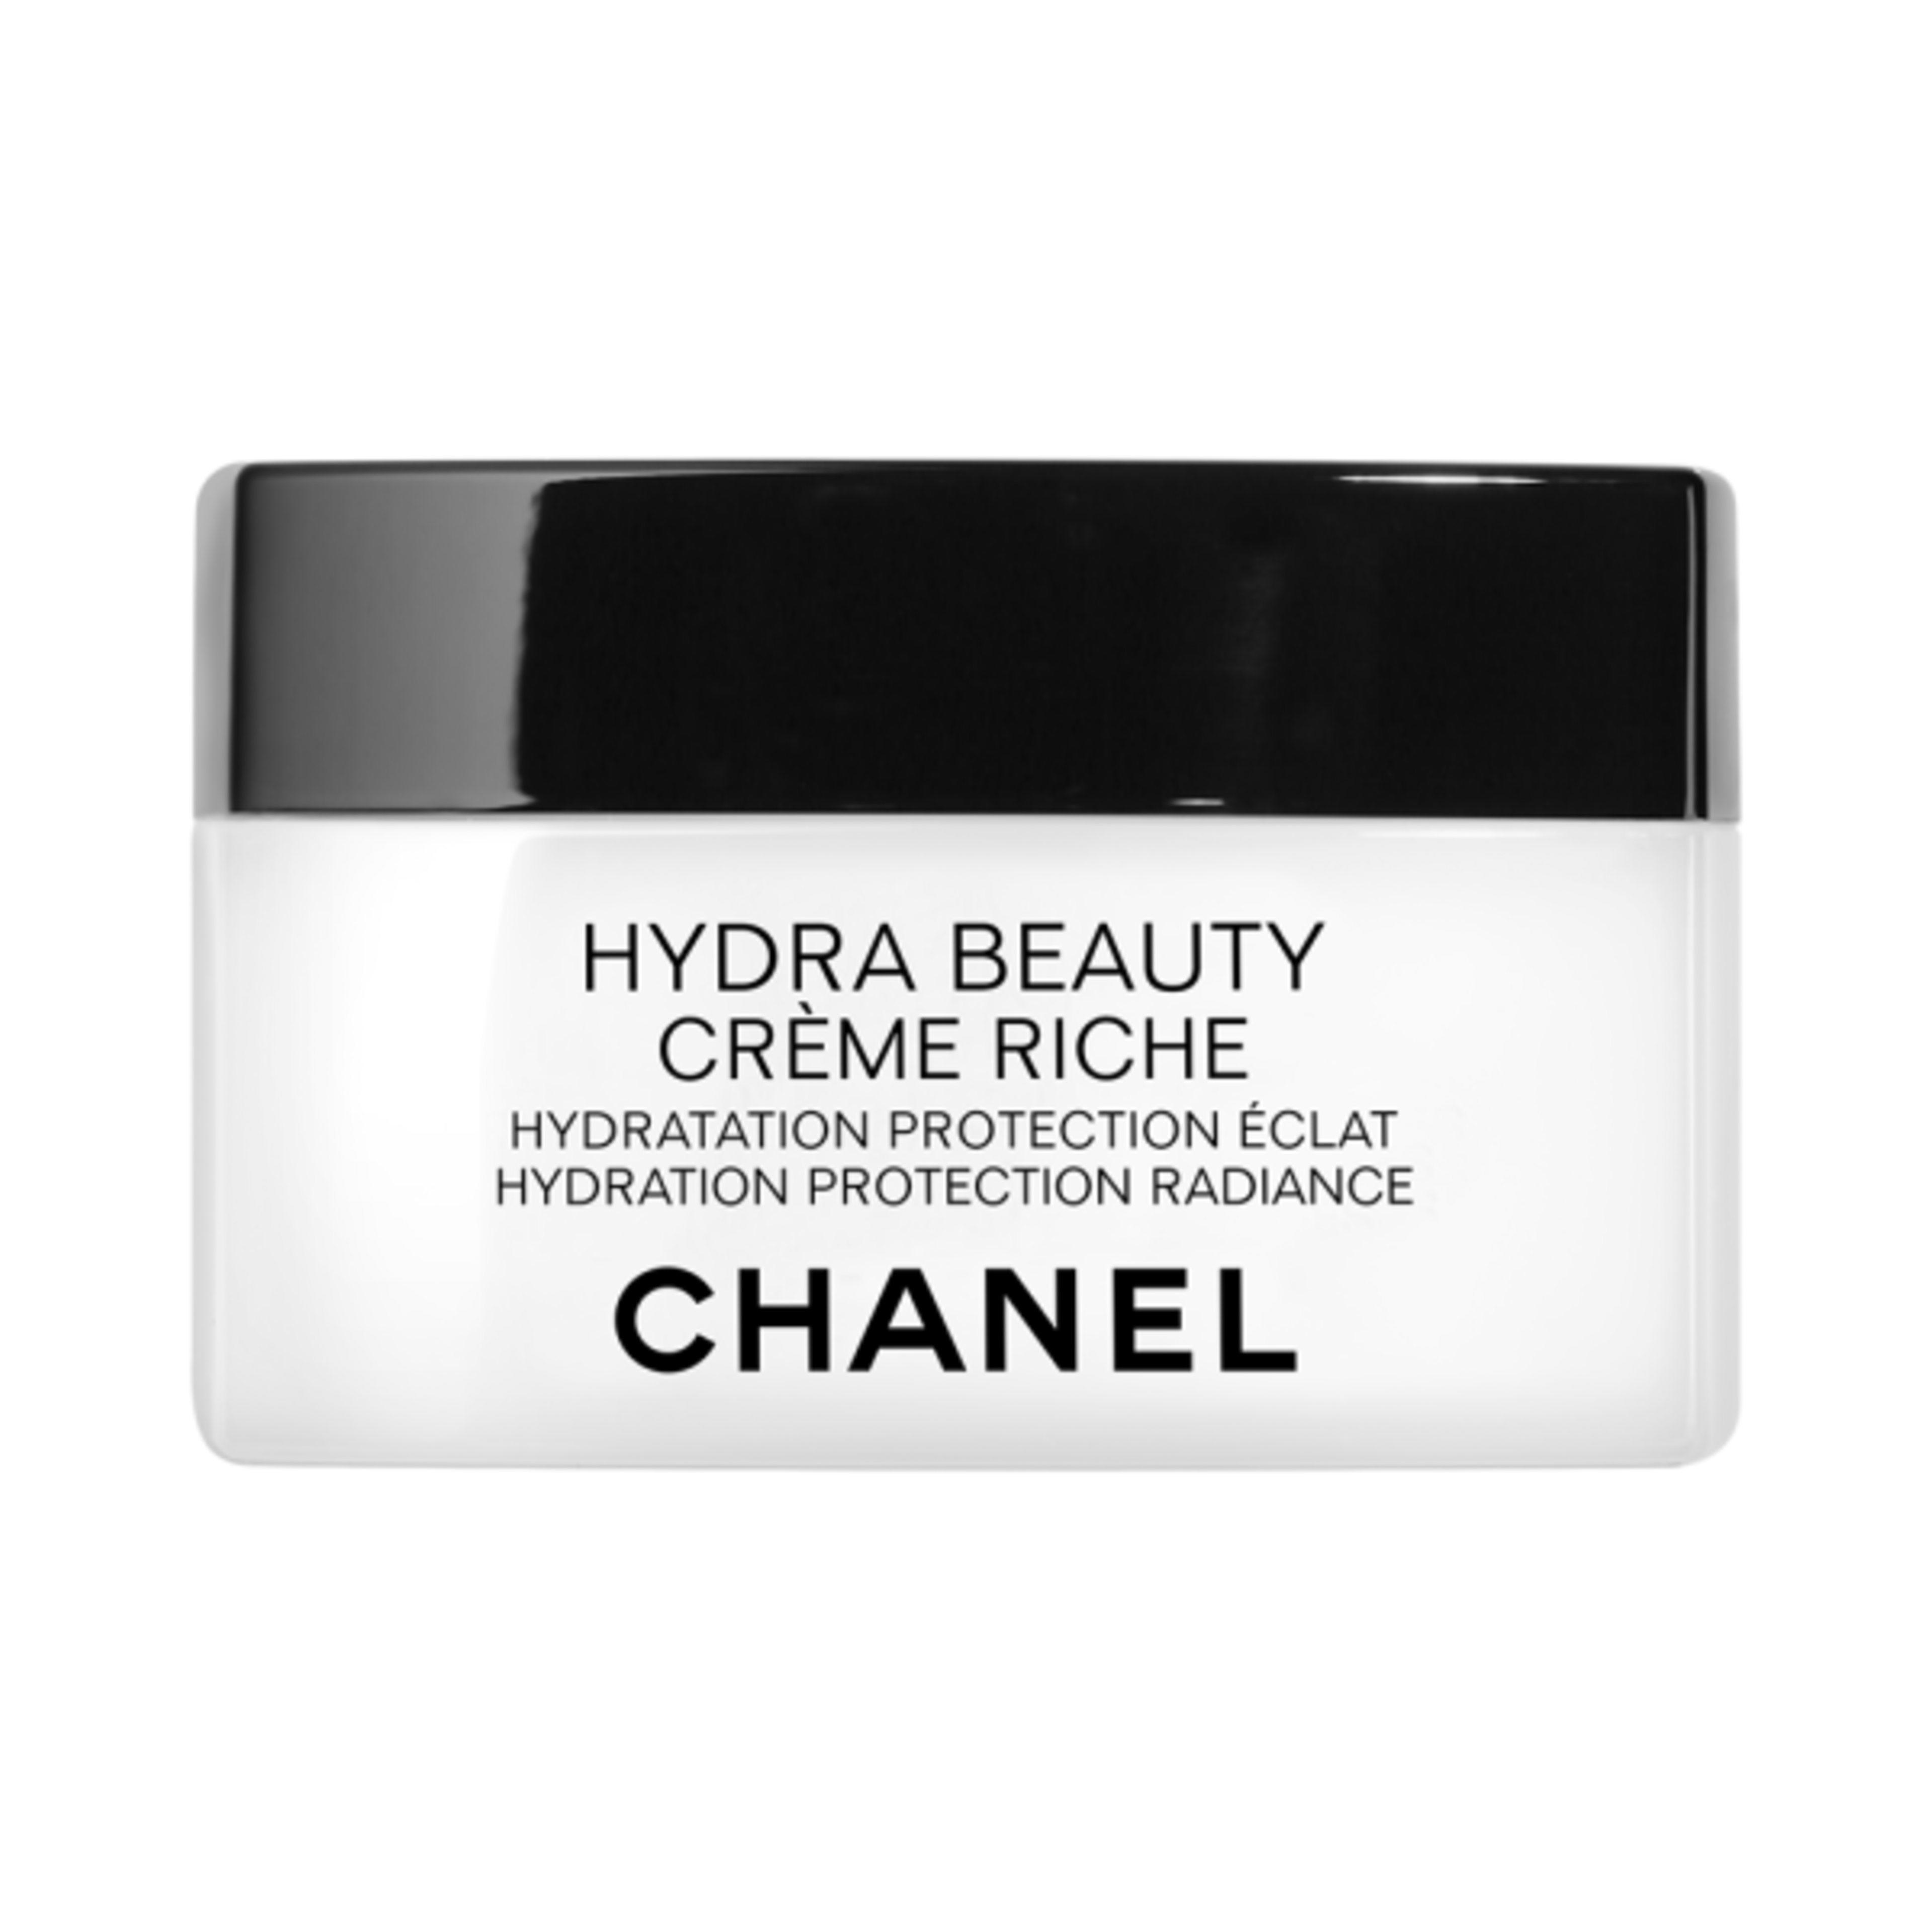 Chanel Hydra Beauty Creme Riche 5ml